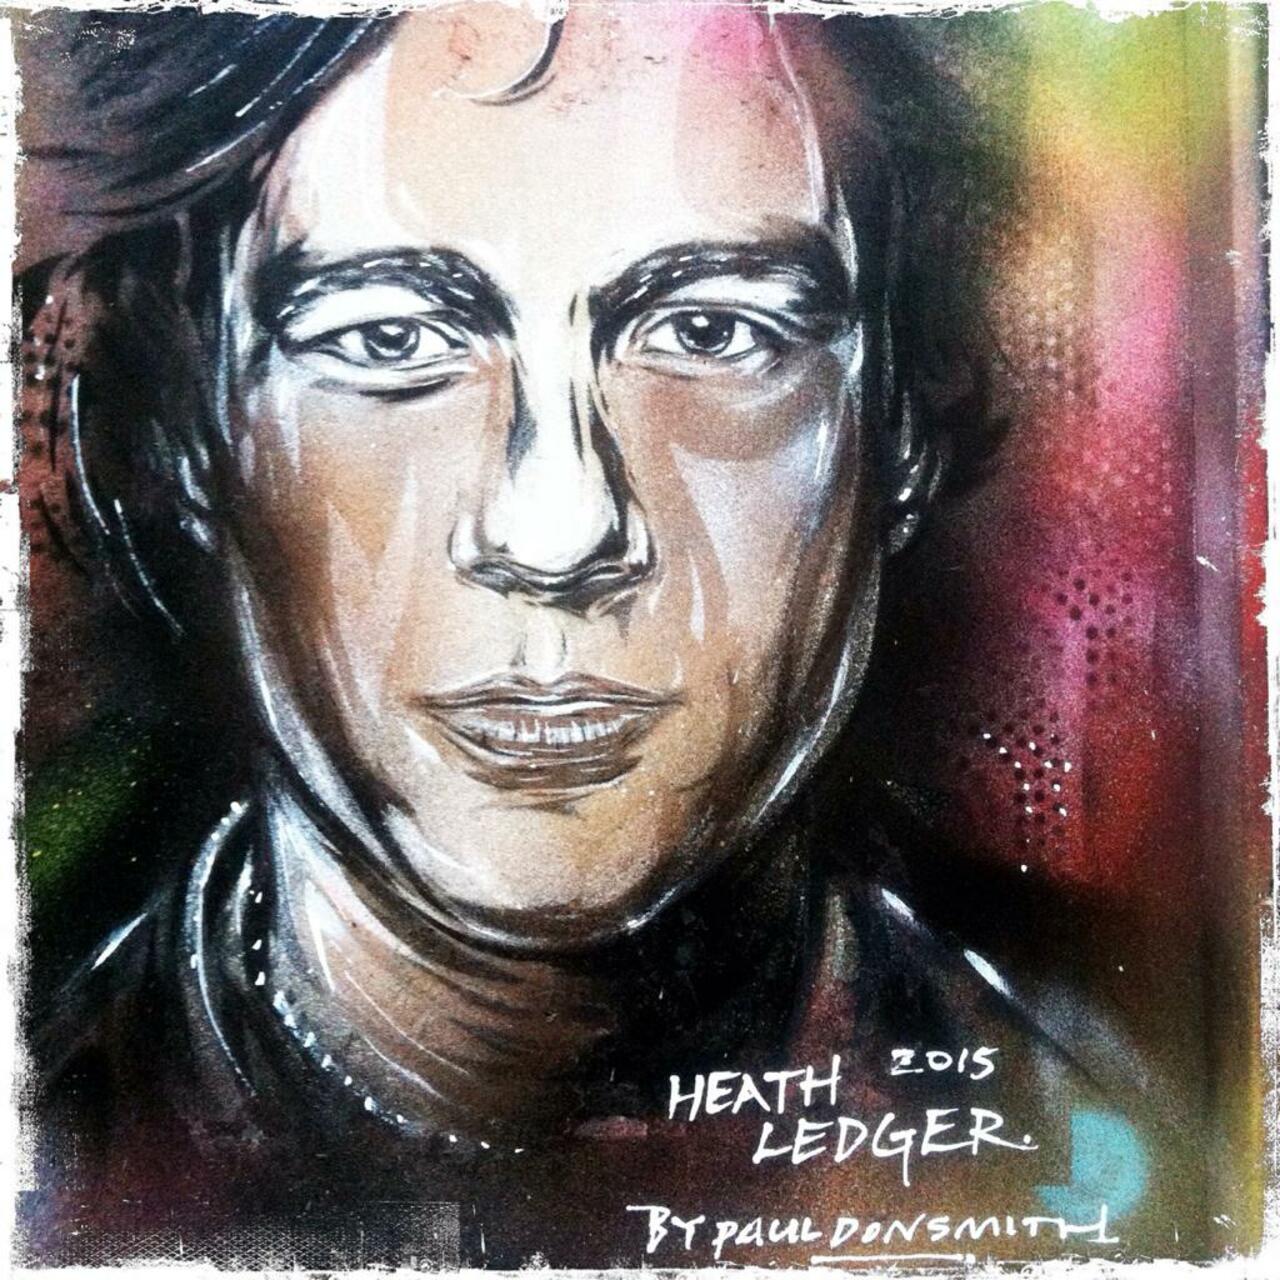 Heath Ledger by #PaulDonSmith 

#art #streetart #graffiti http://t.co/j9g8okQeVZ